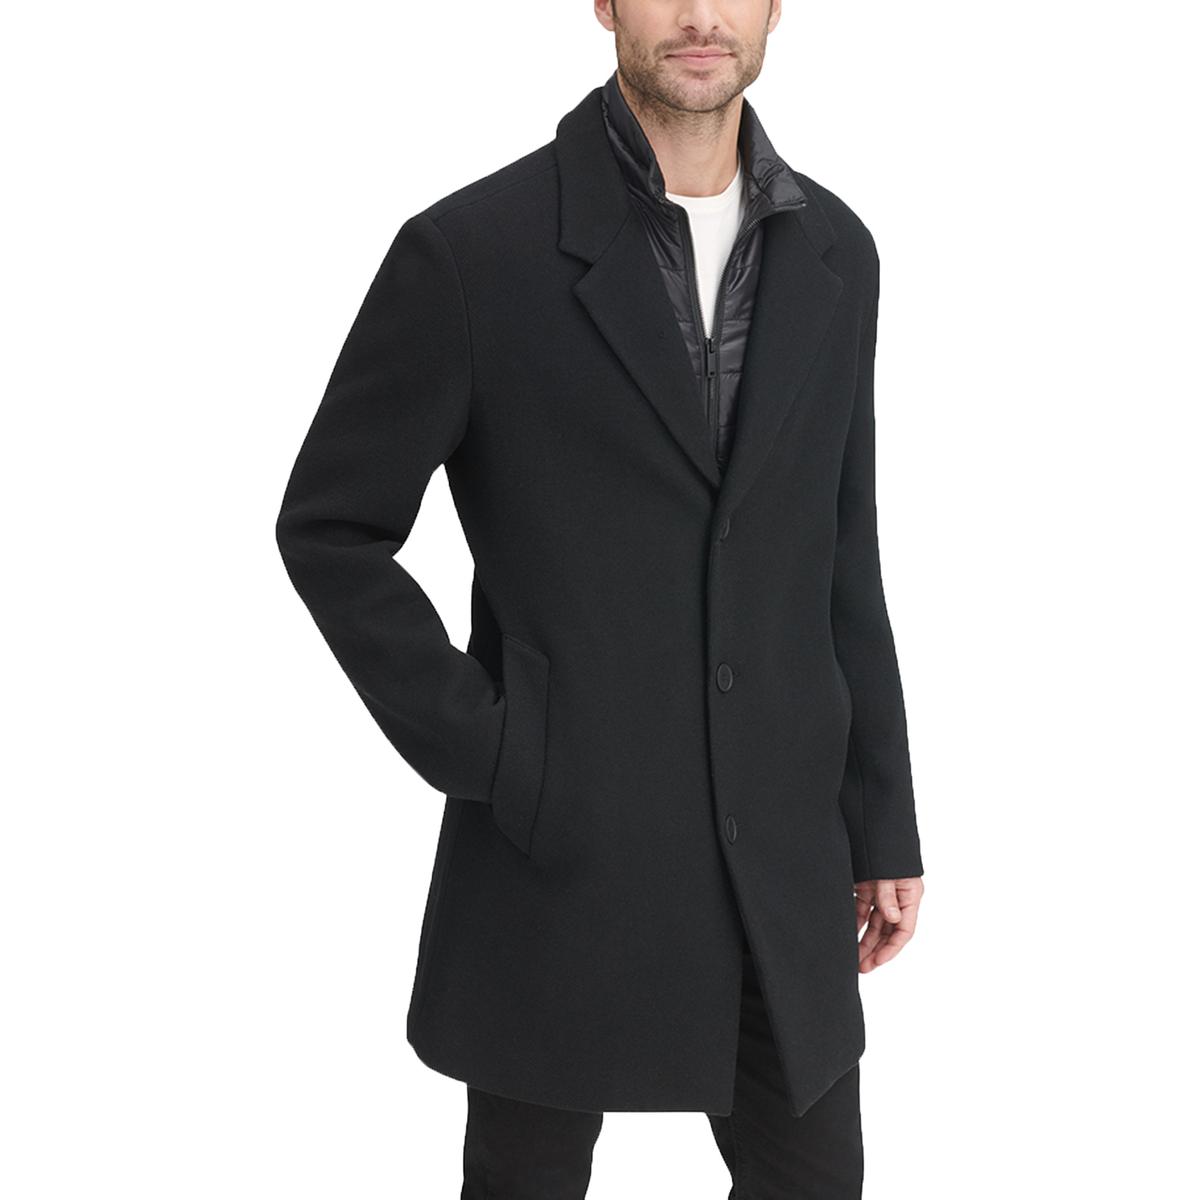 DKNY Mens Black Wool Blend Warm Dressy Top Coat Outerwear S BHFO 6714 ...